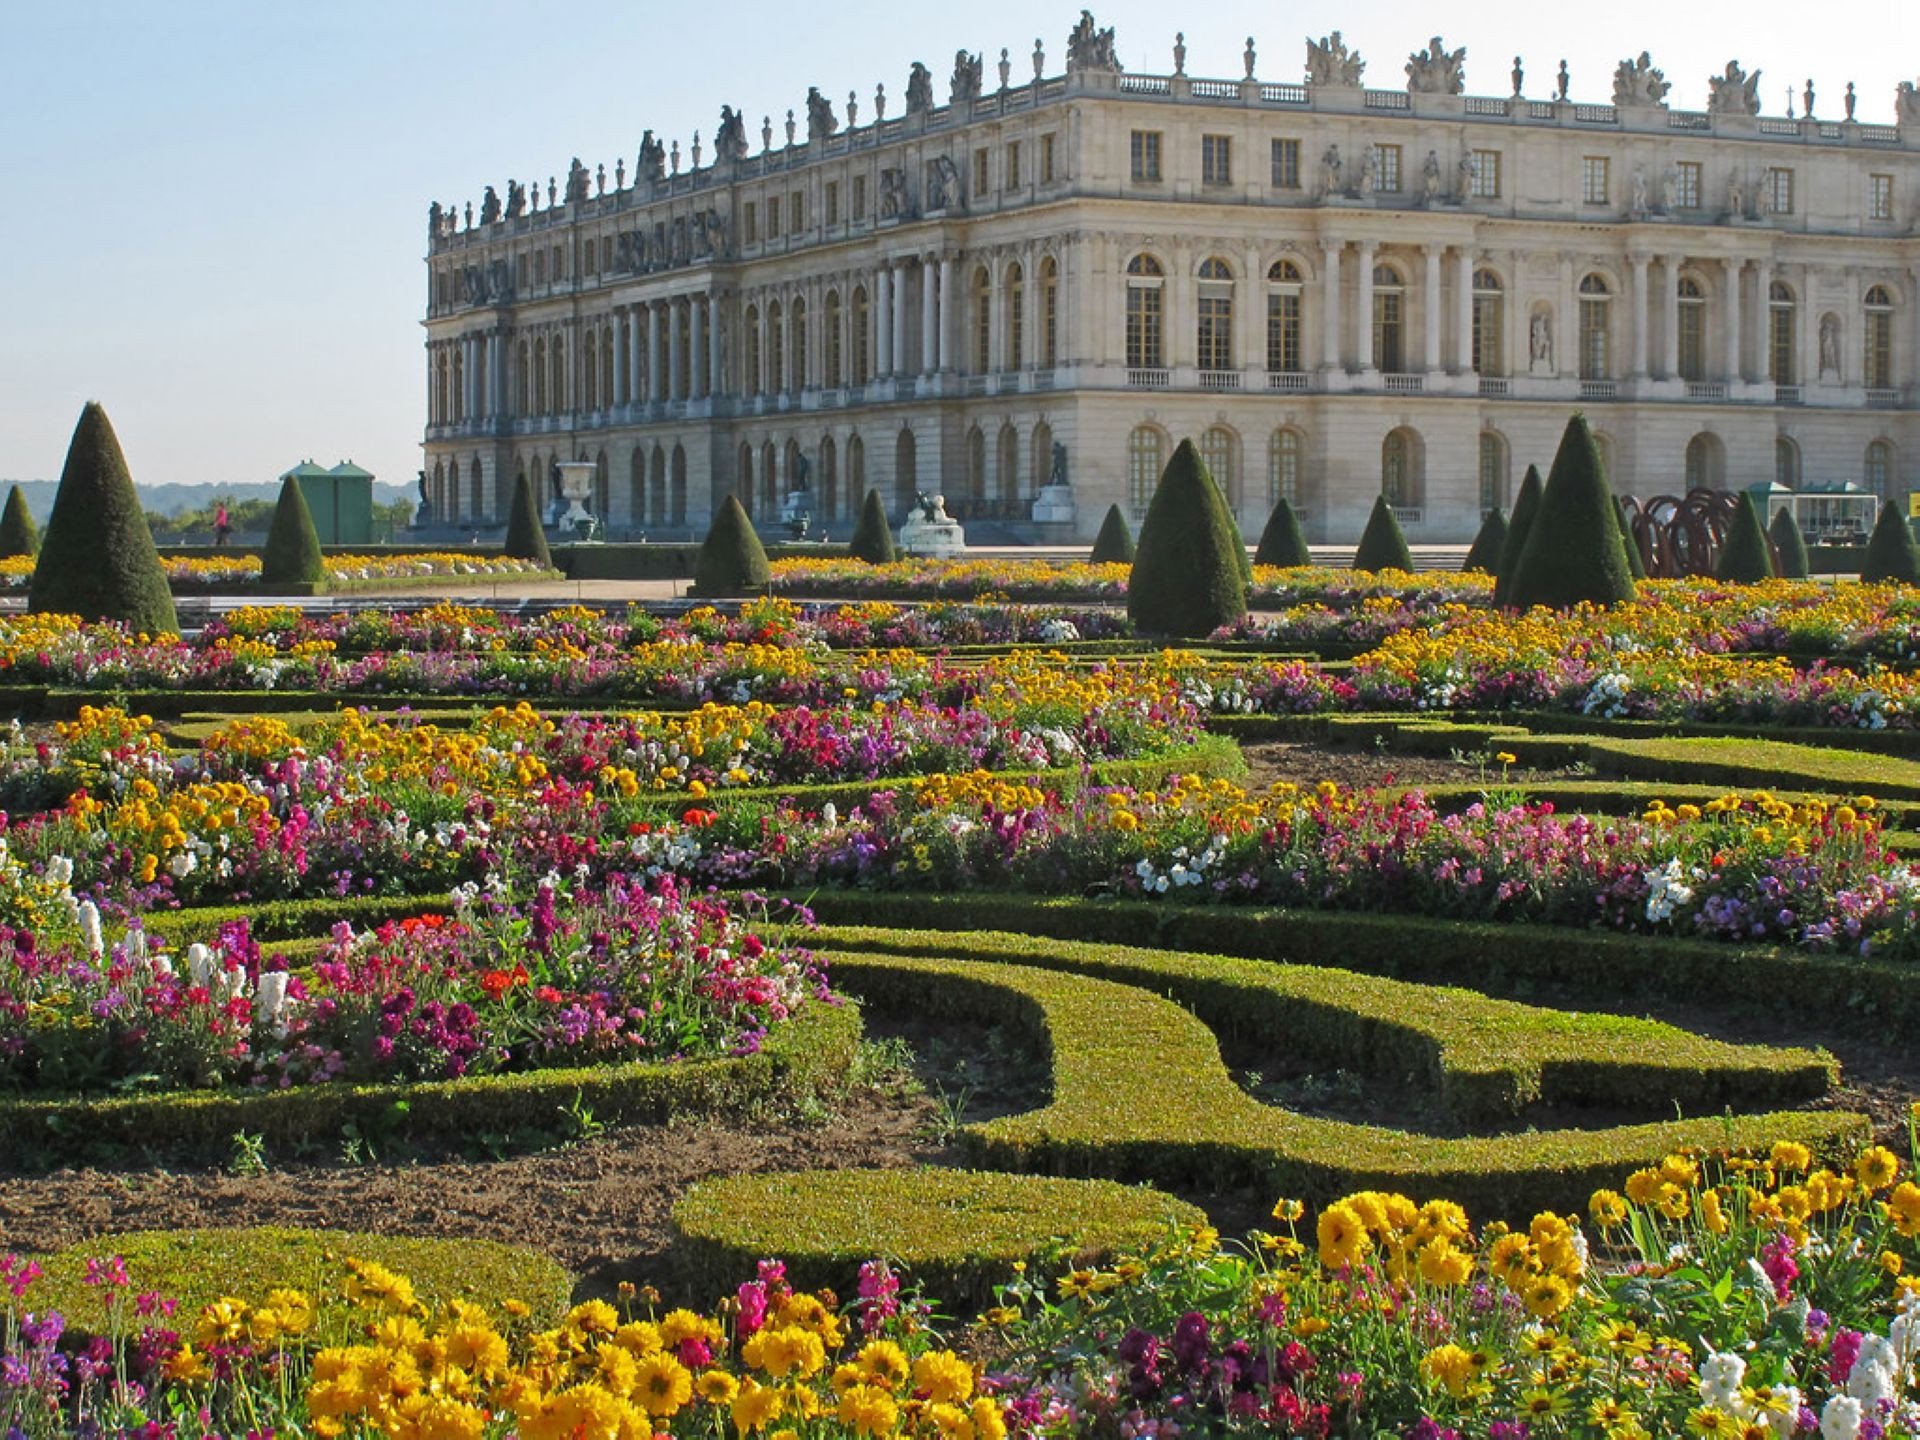 Chateau de versailles. Версальский дворец. Версаль. Версальский дворец дворцы Франции. Замок Версаль в Париже. Версальский дворец и сады во Франции.